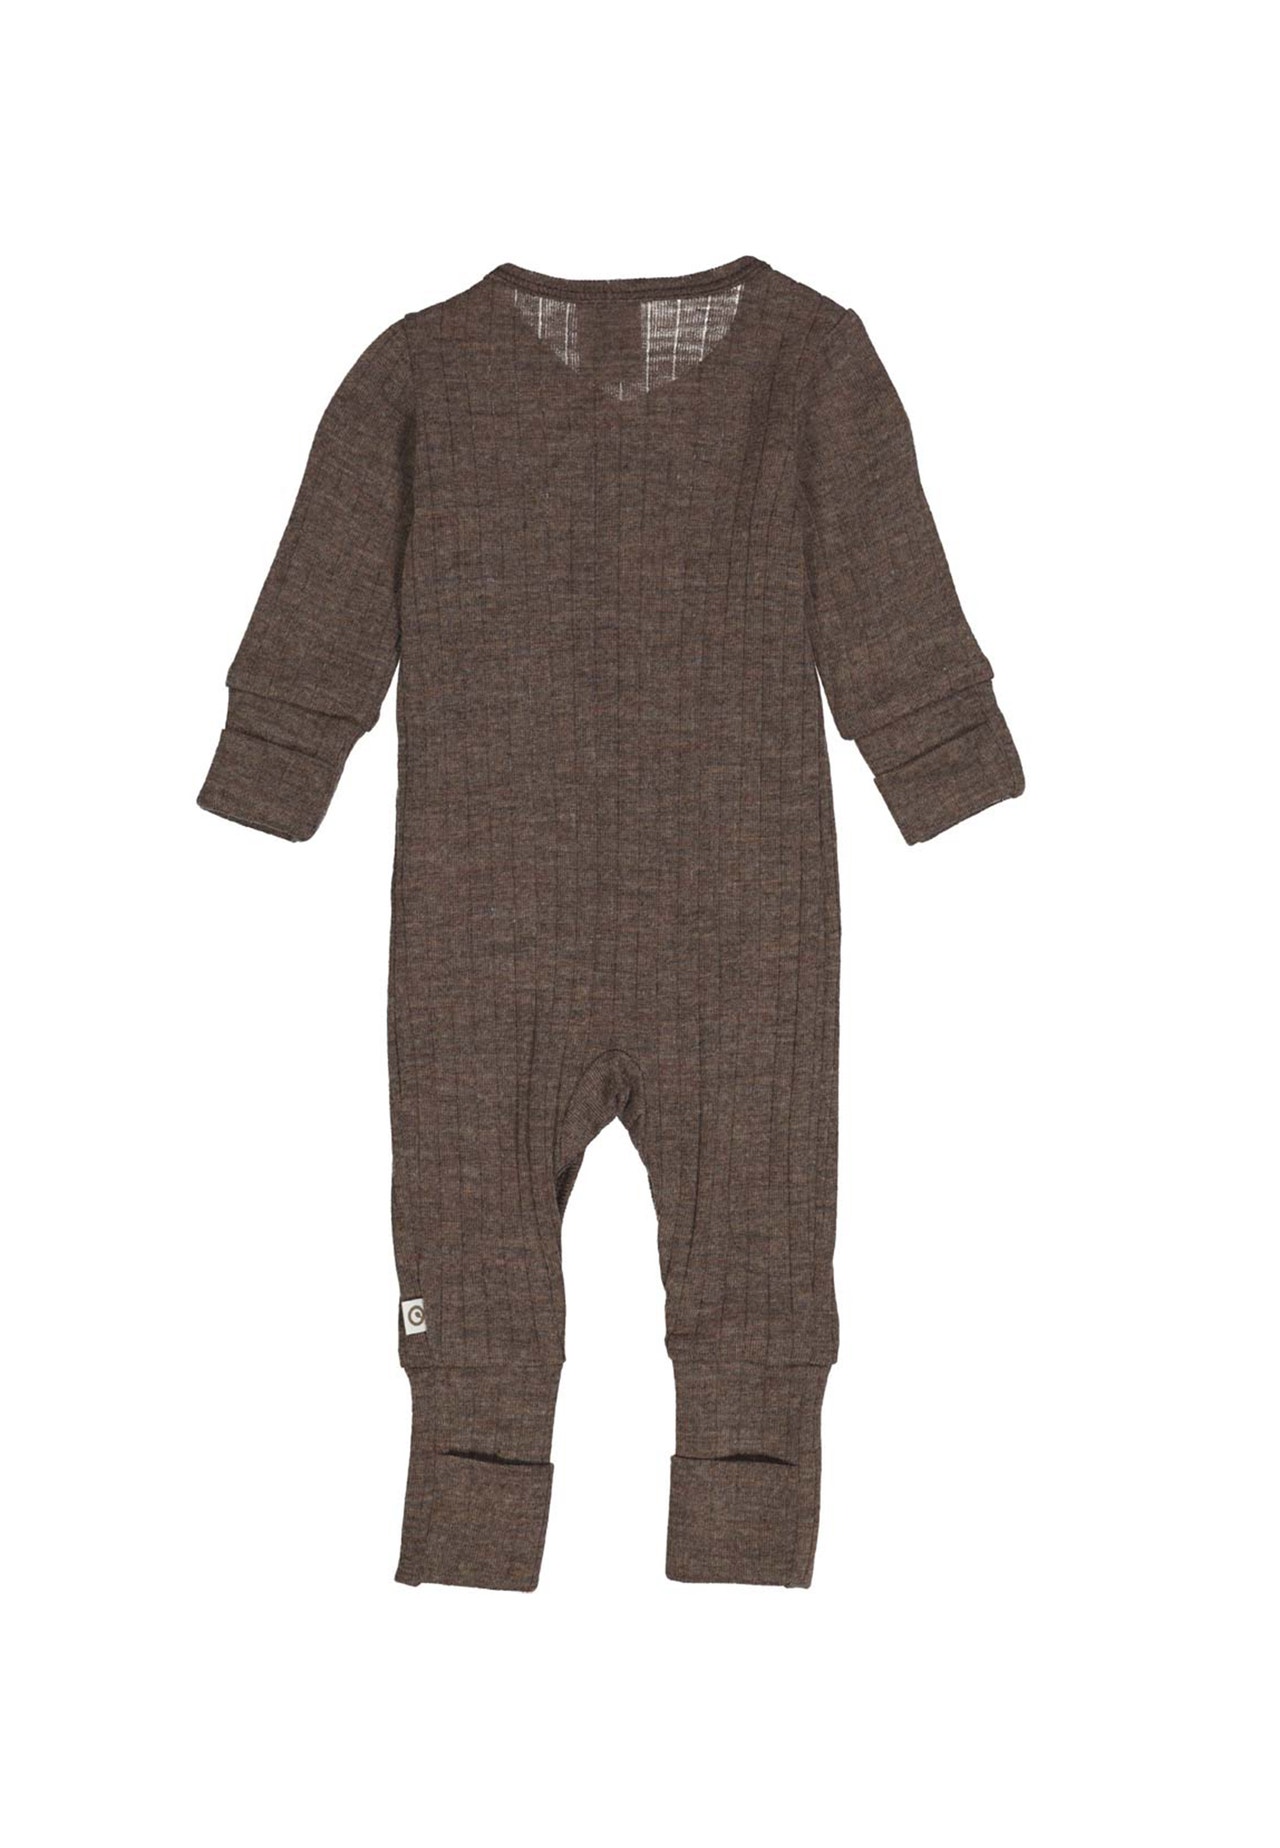 MAMA.LICIOUS Wool baby-one-piece suit -Walnut  - 1584061700